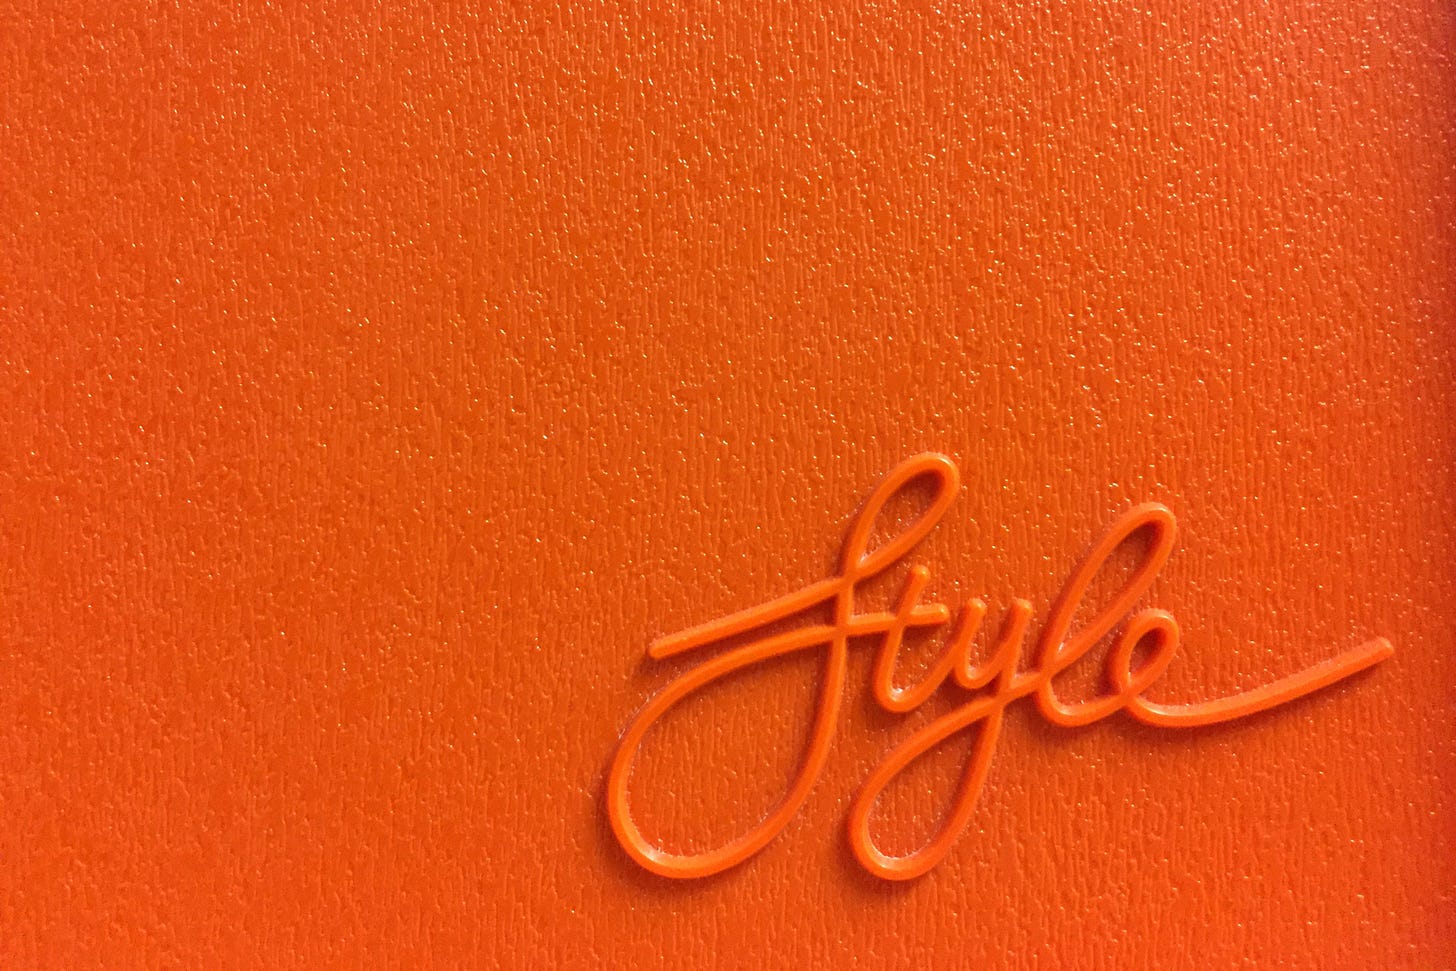 raised orange cursive text that reads 'style' on an orange, textured background